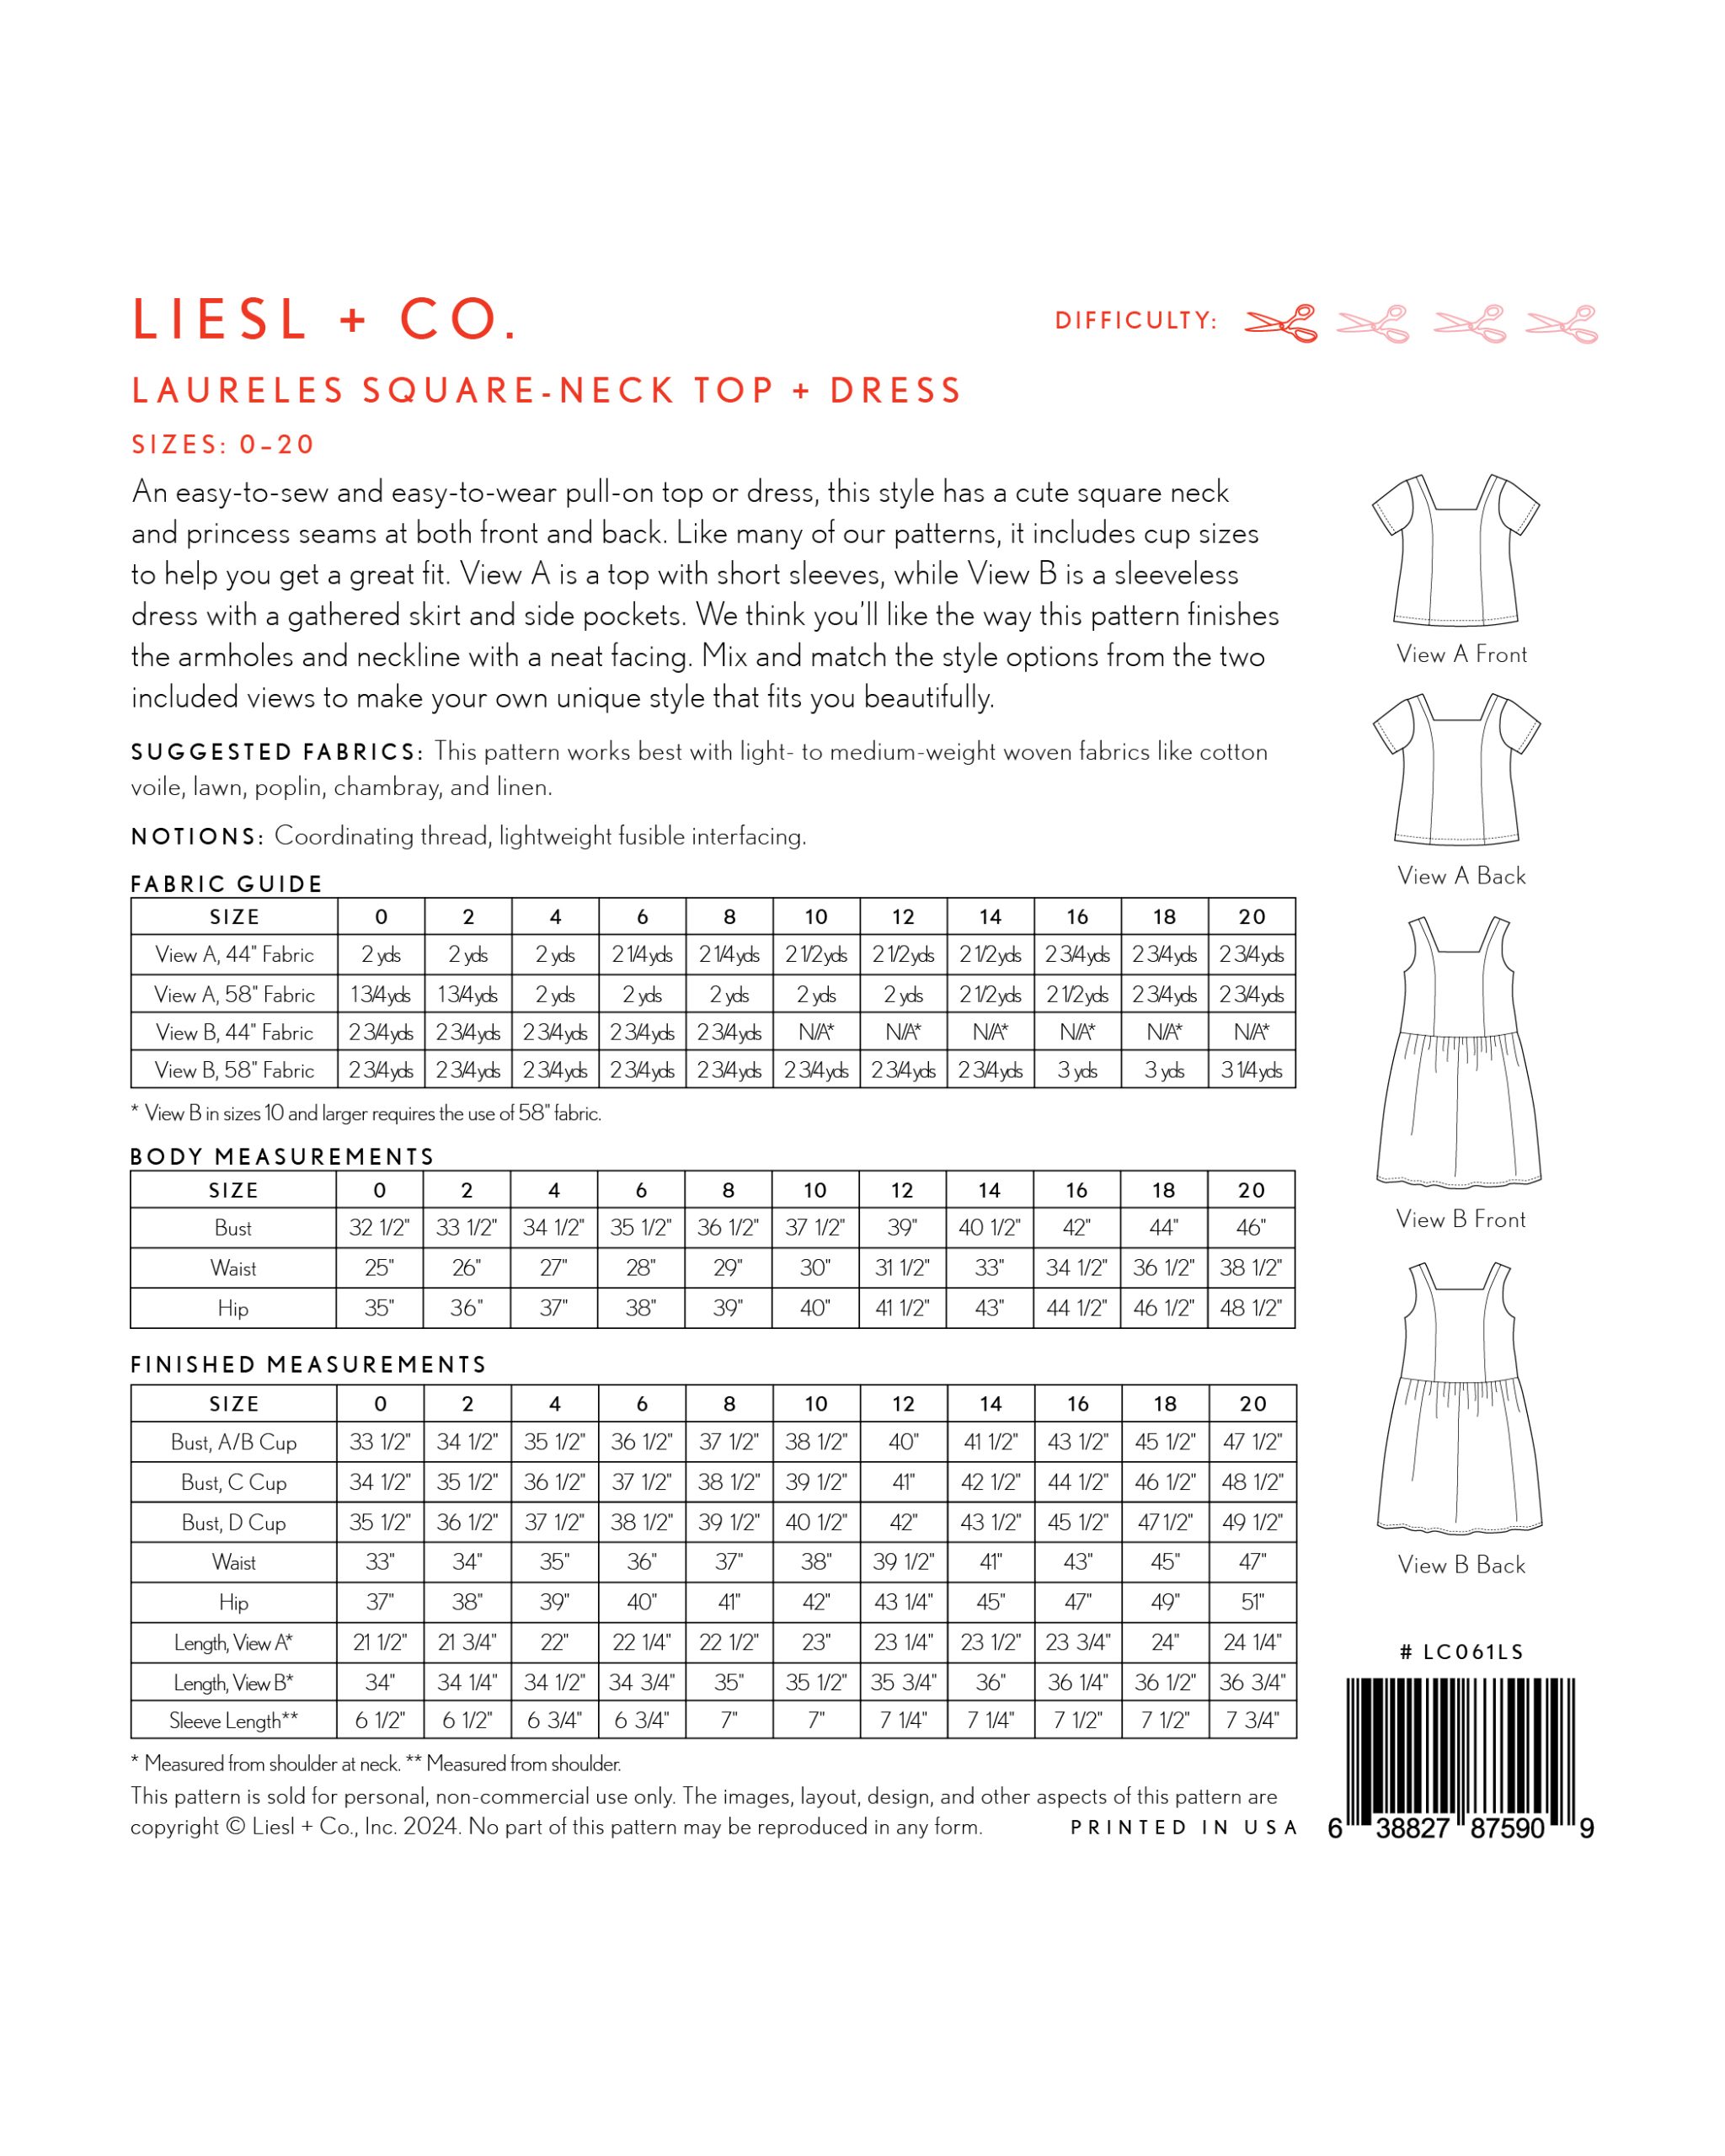 Liesl + Co Laureles Square-neck Top and Dress